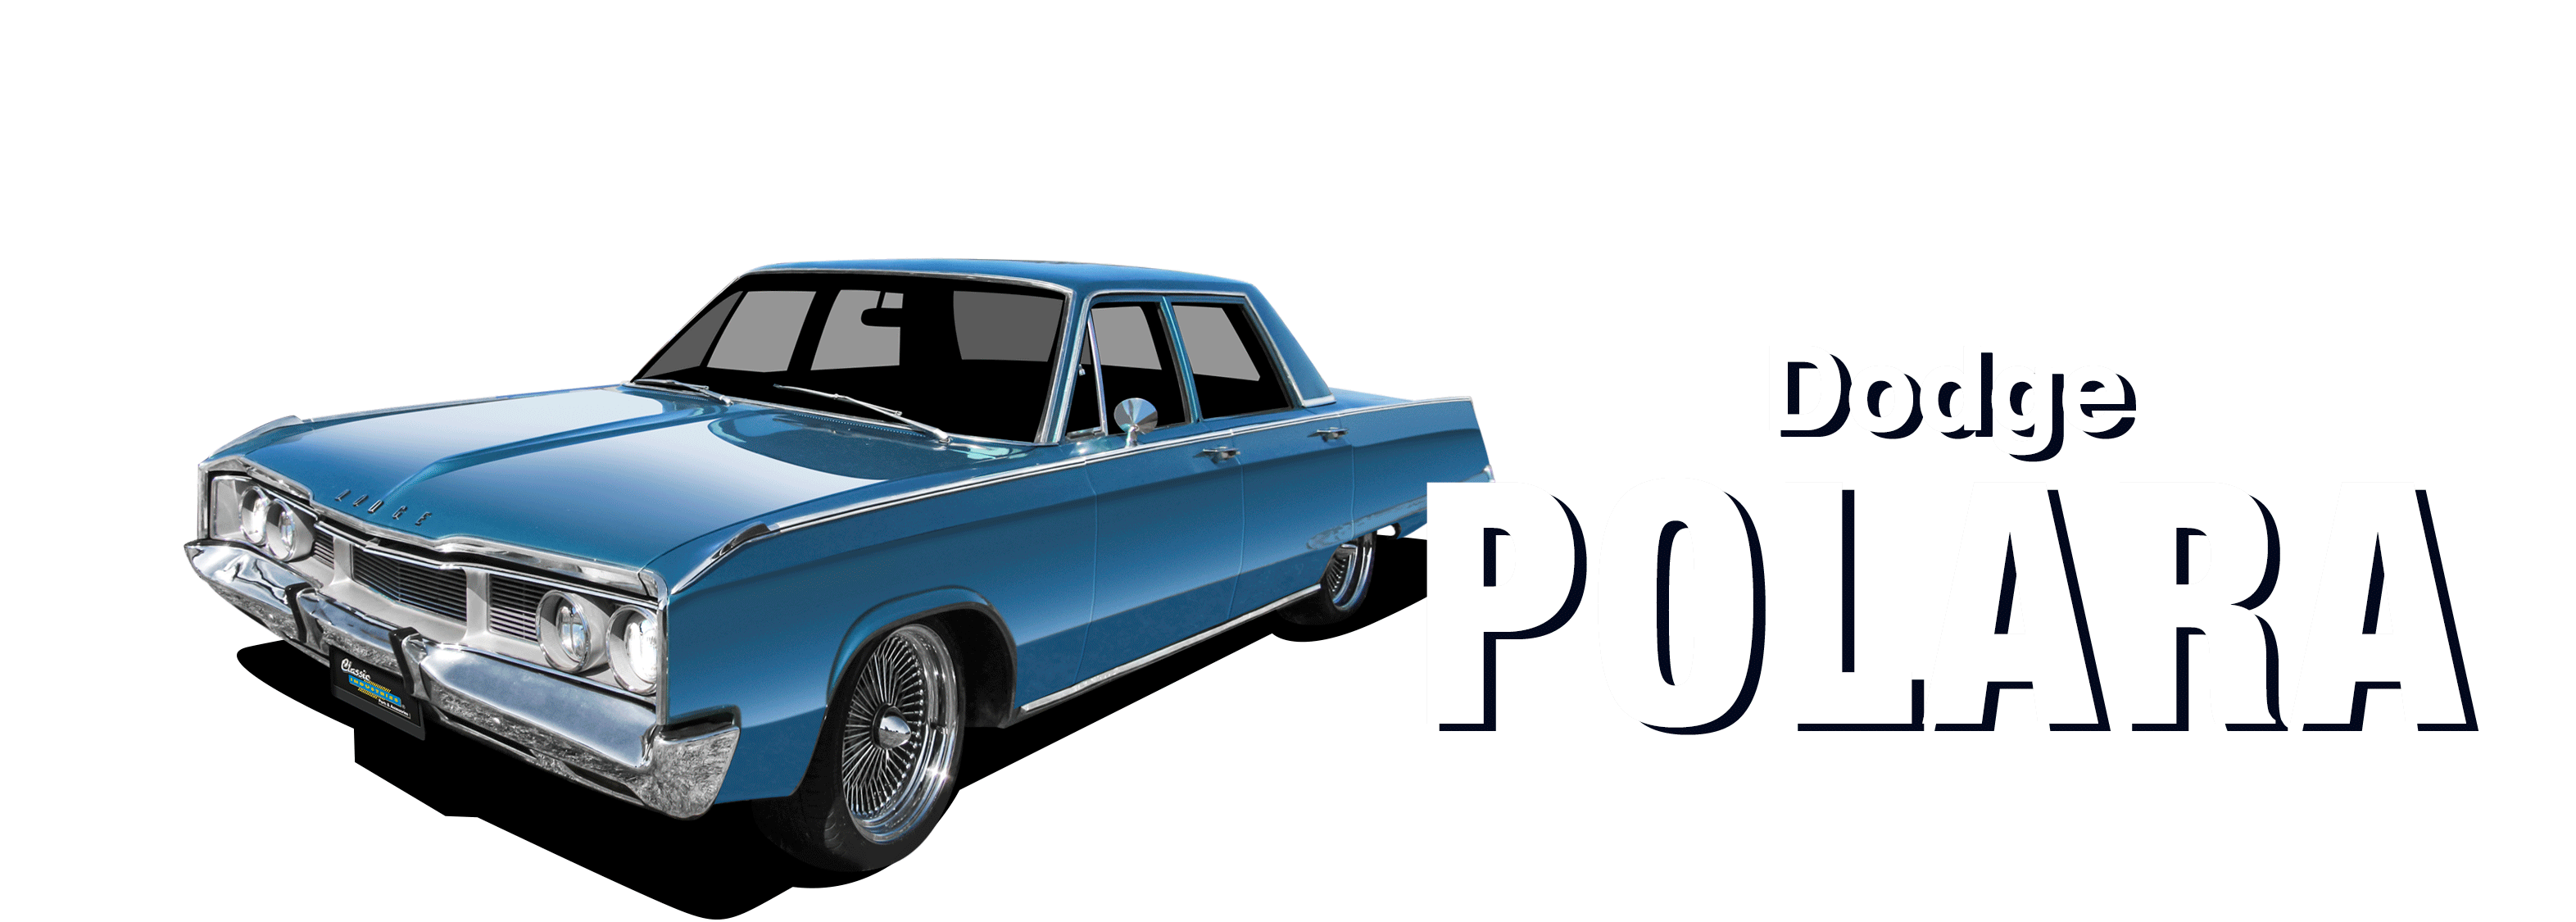 60-73Dodge-Polara-vehicle-desktop